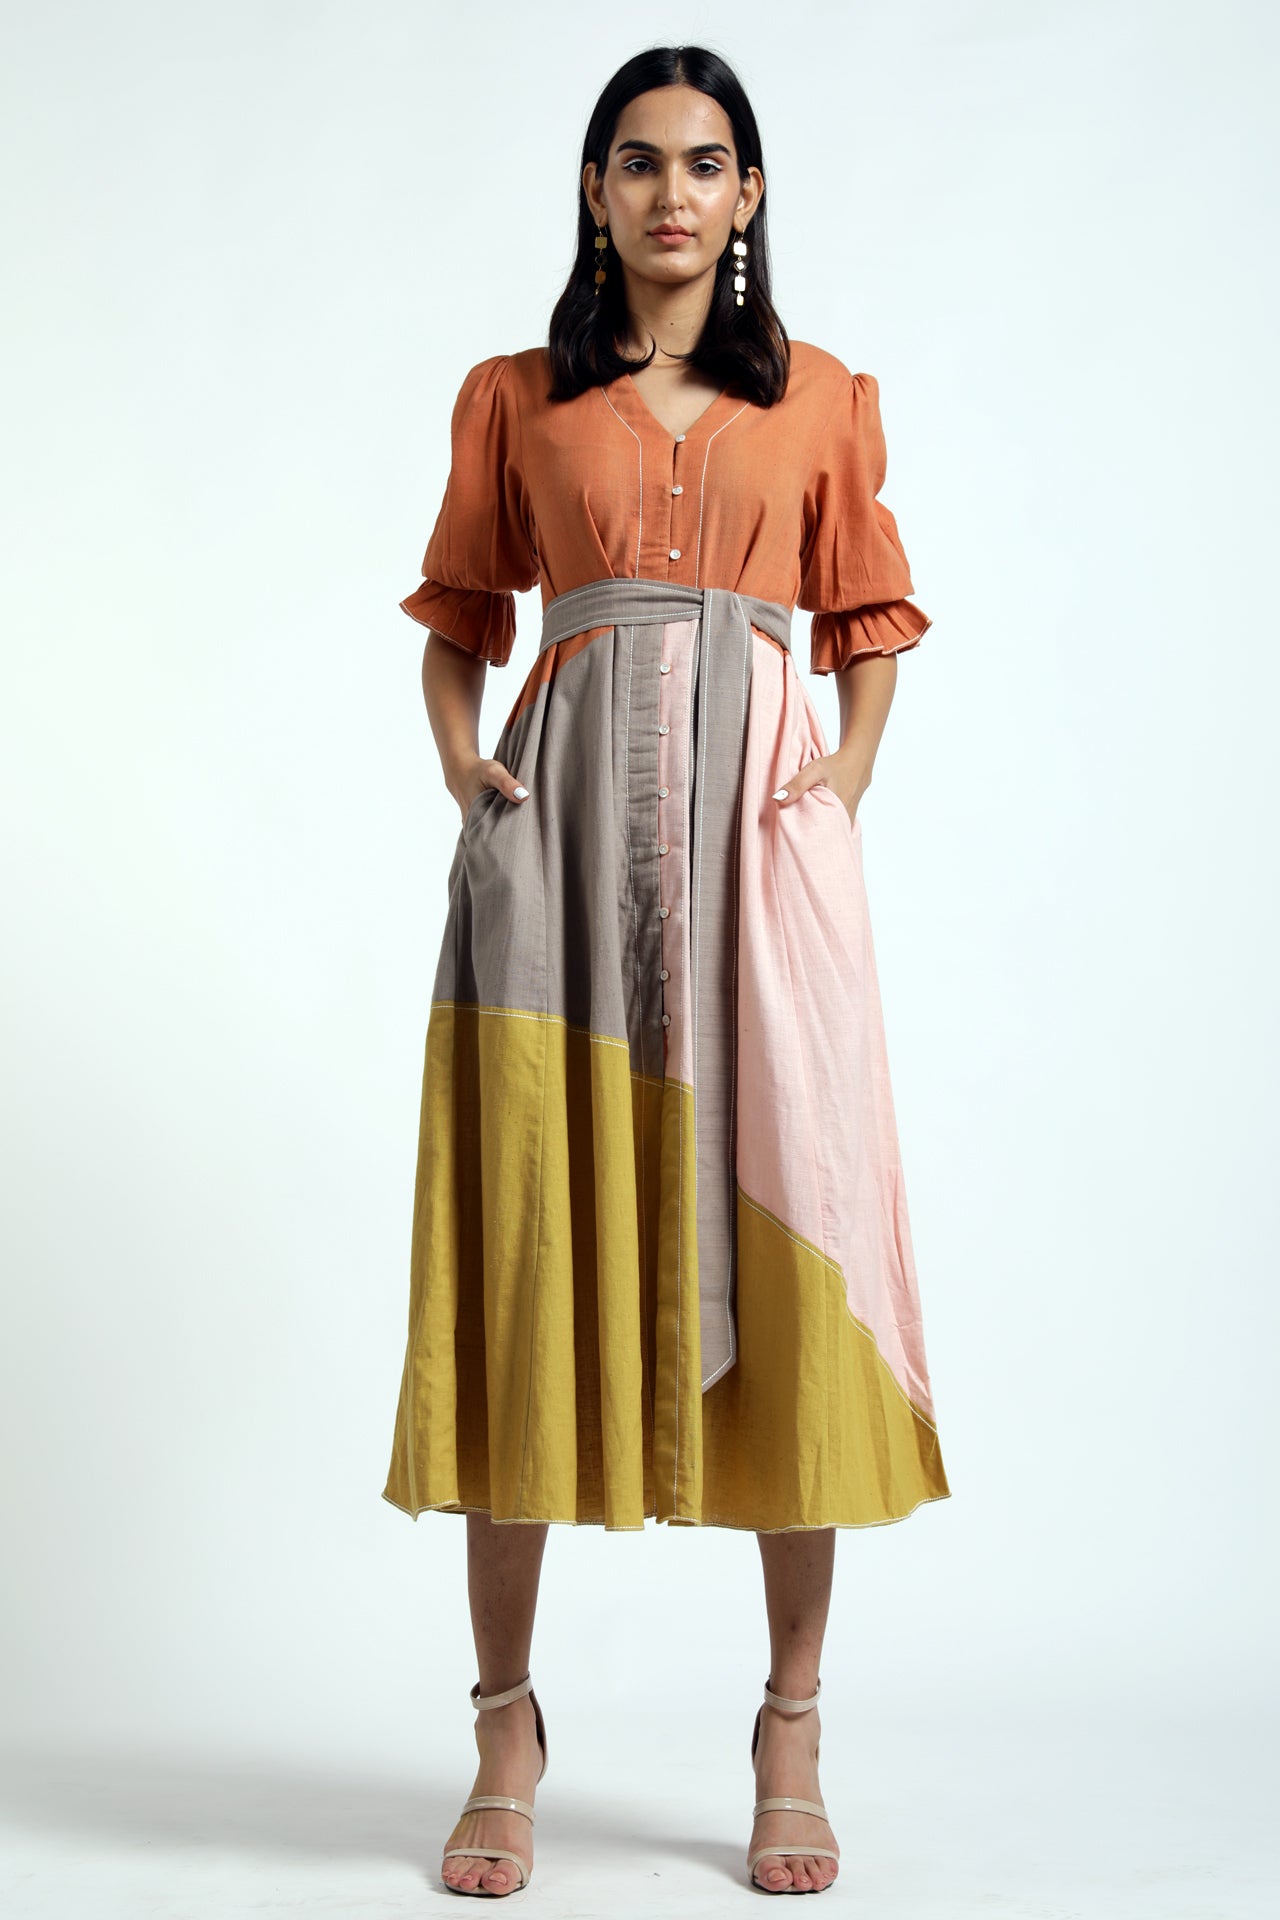 Safiya - Segmented Midi Dress